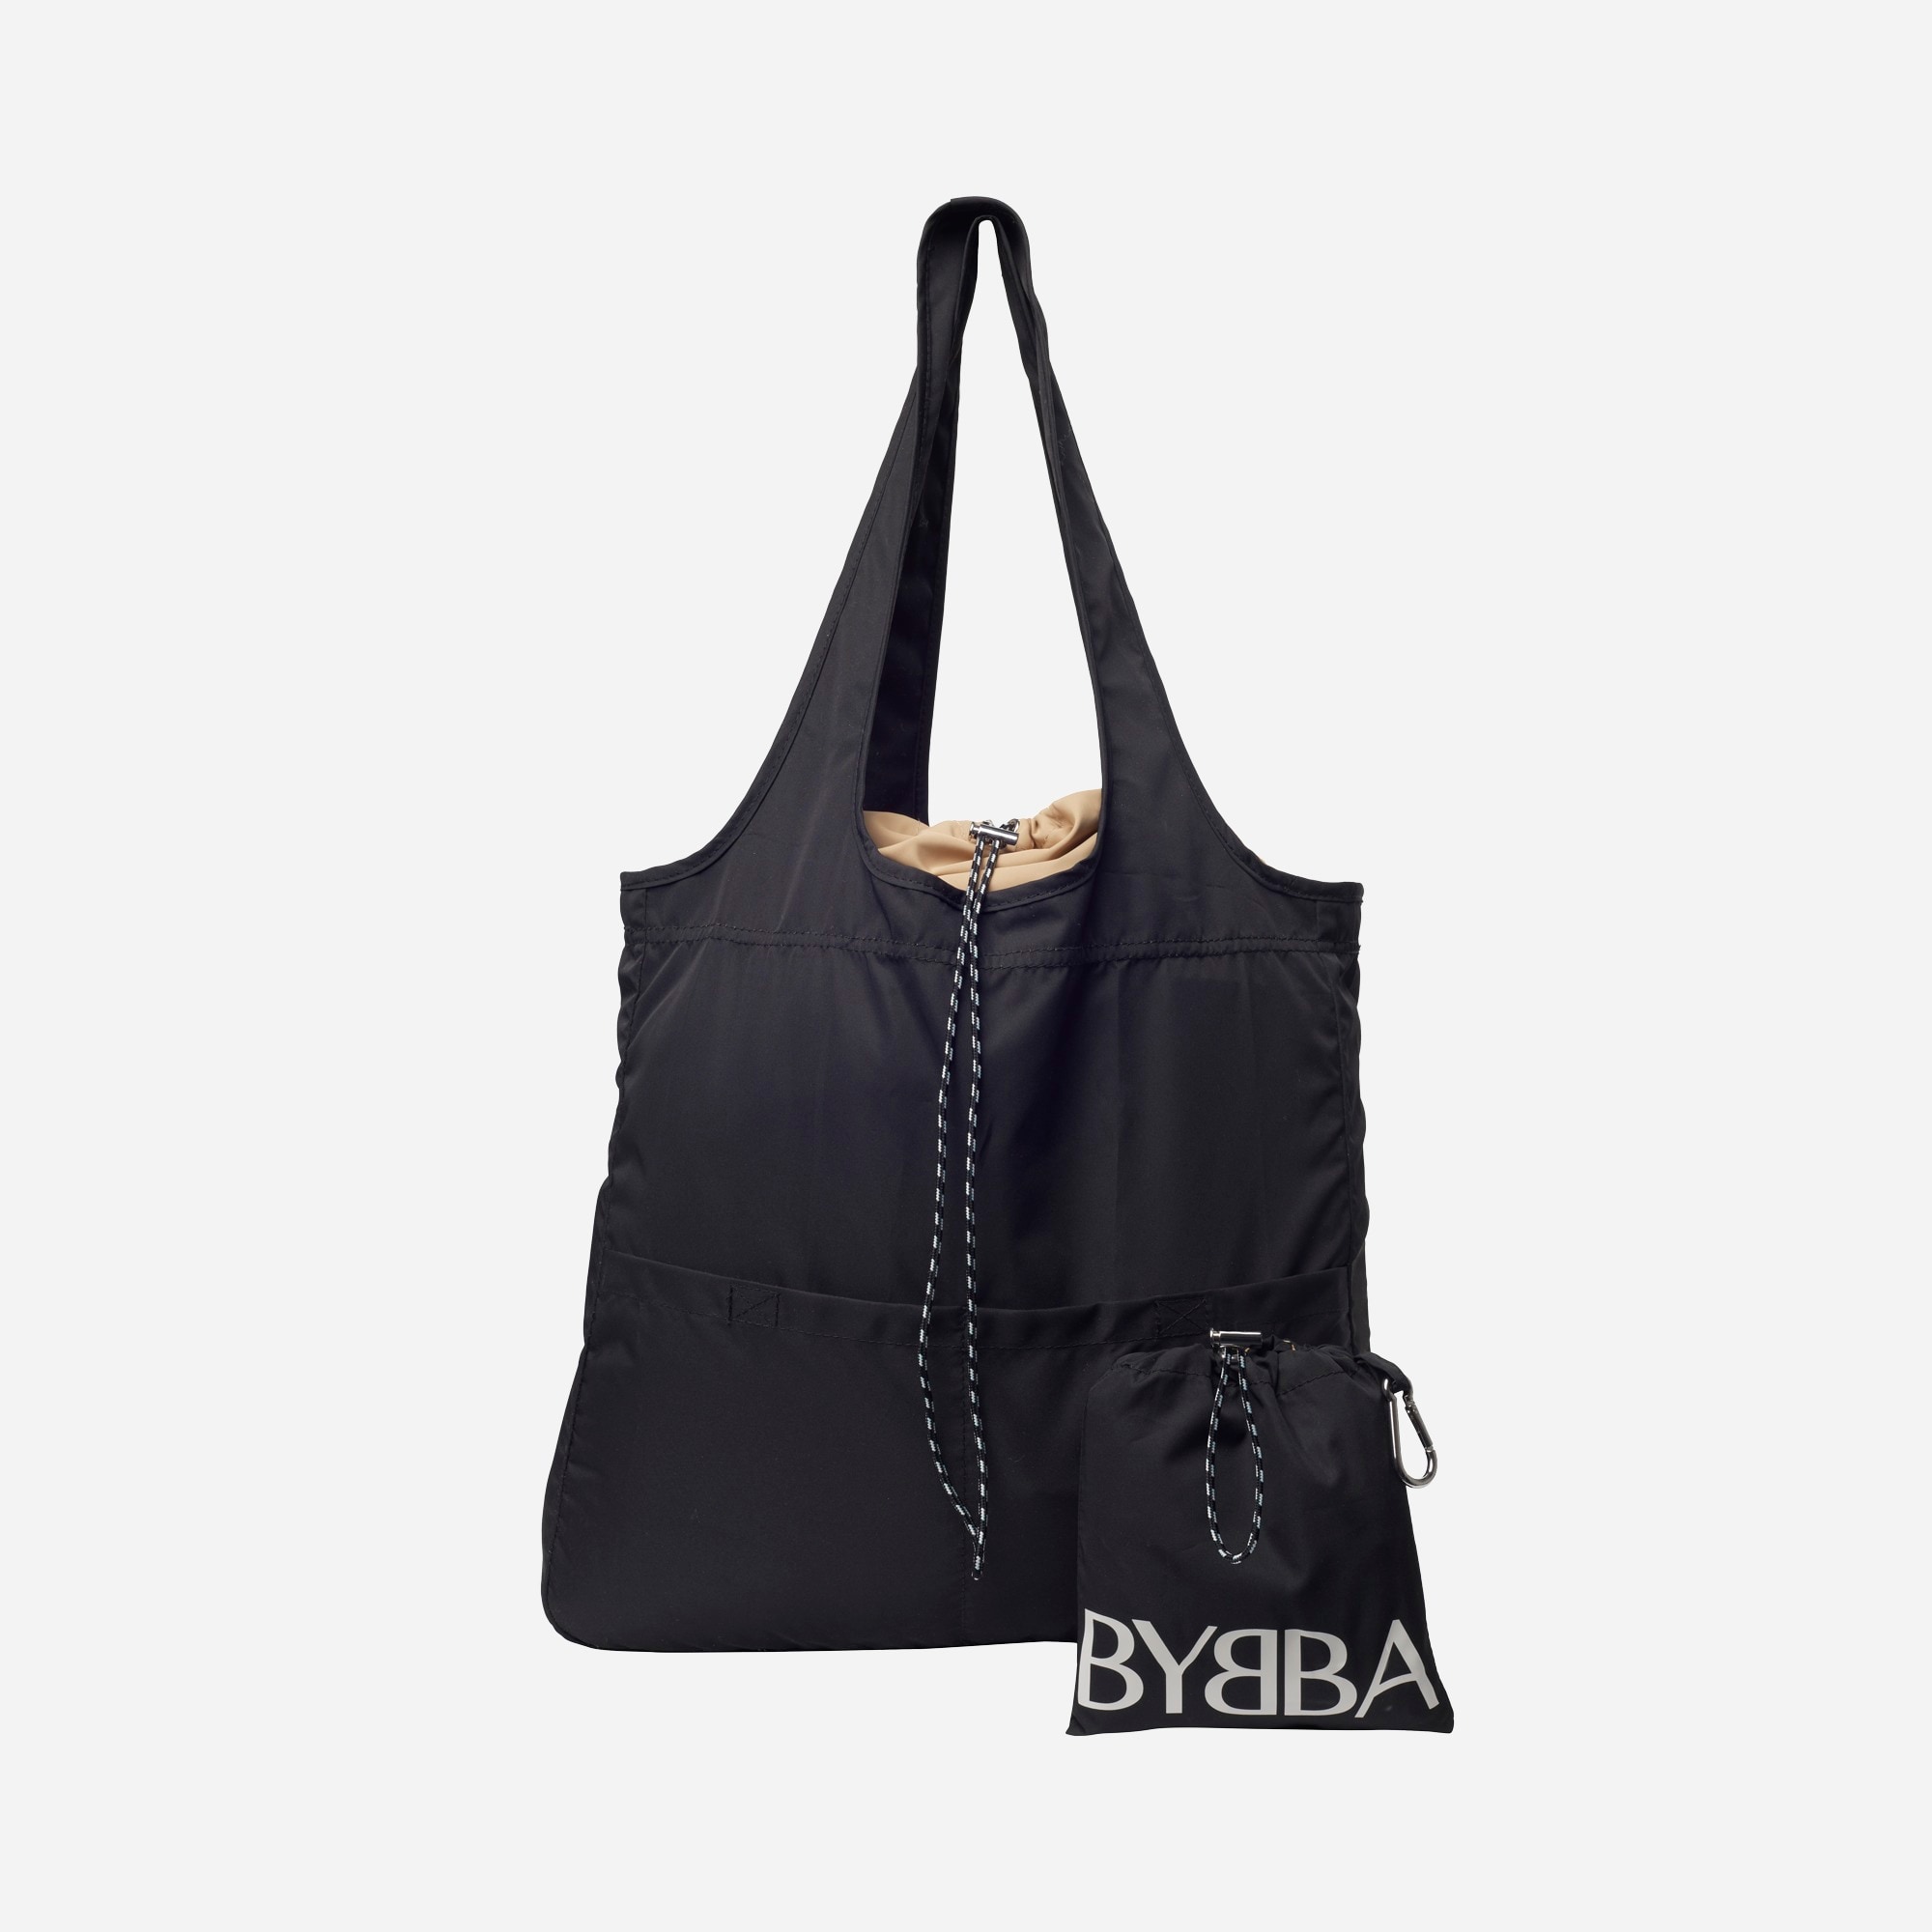 womens BYBBA Balos-stingray khaki tote bag